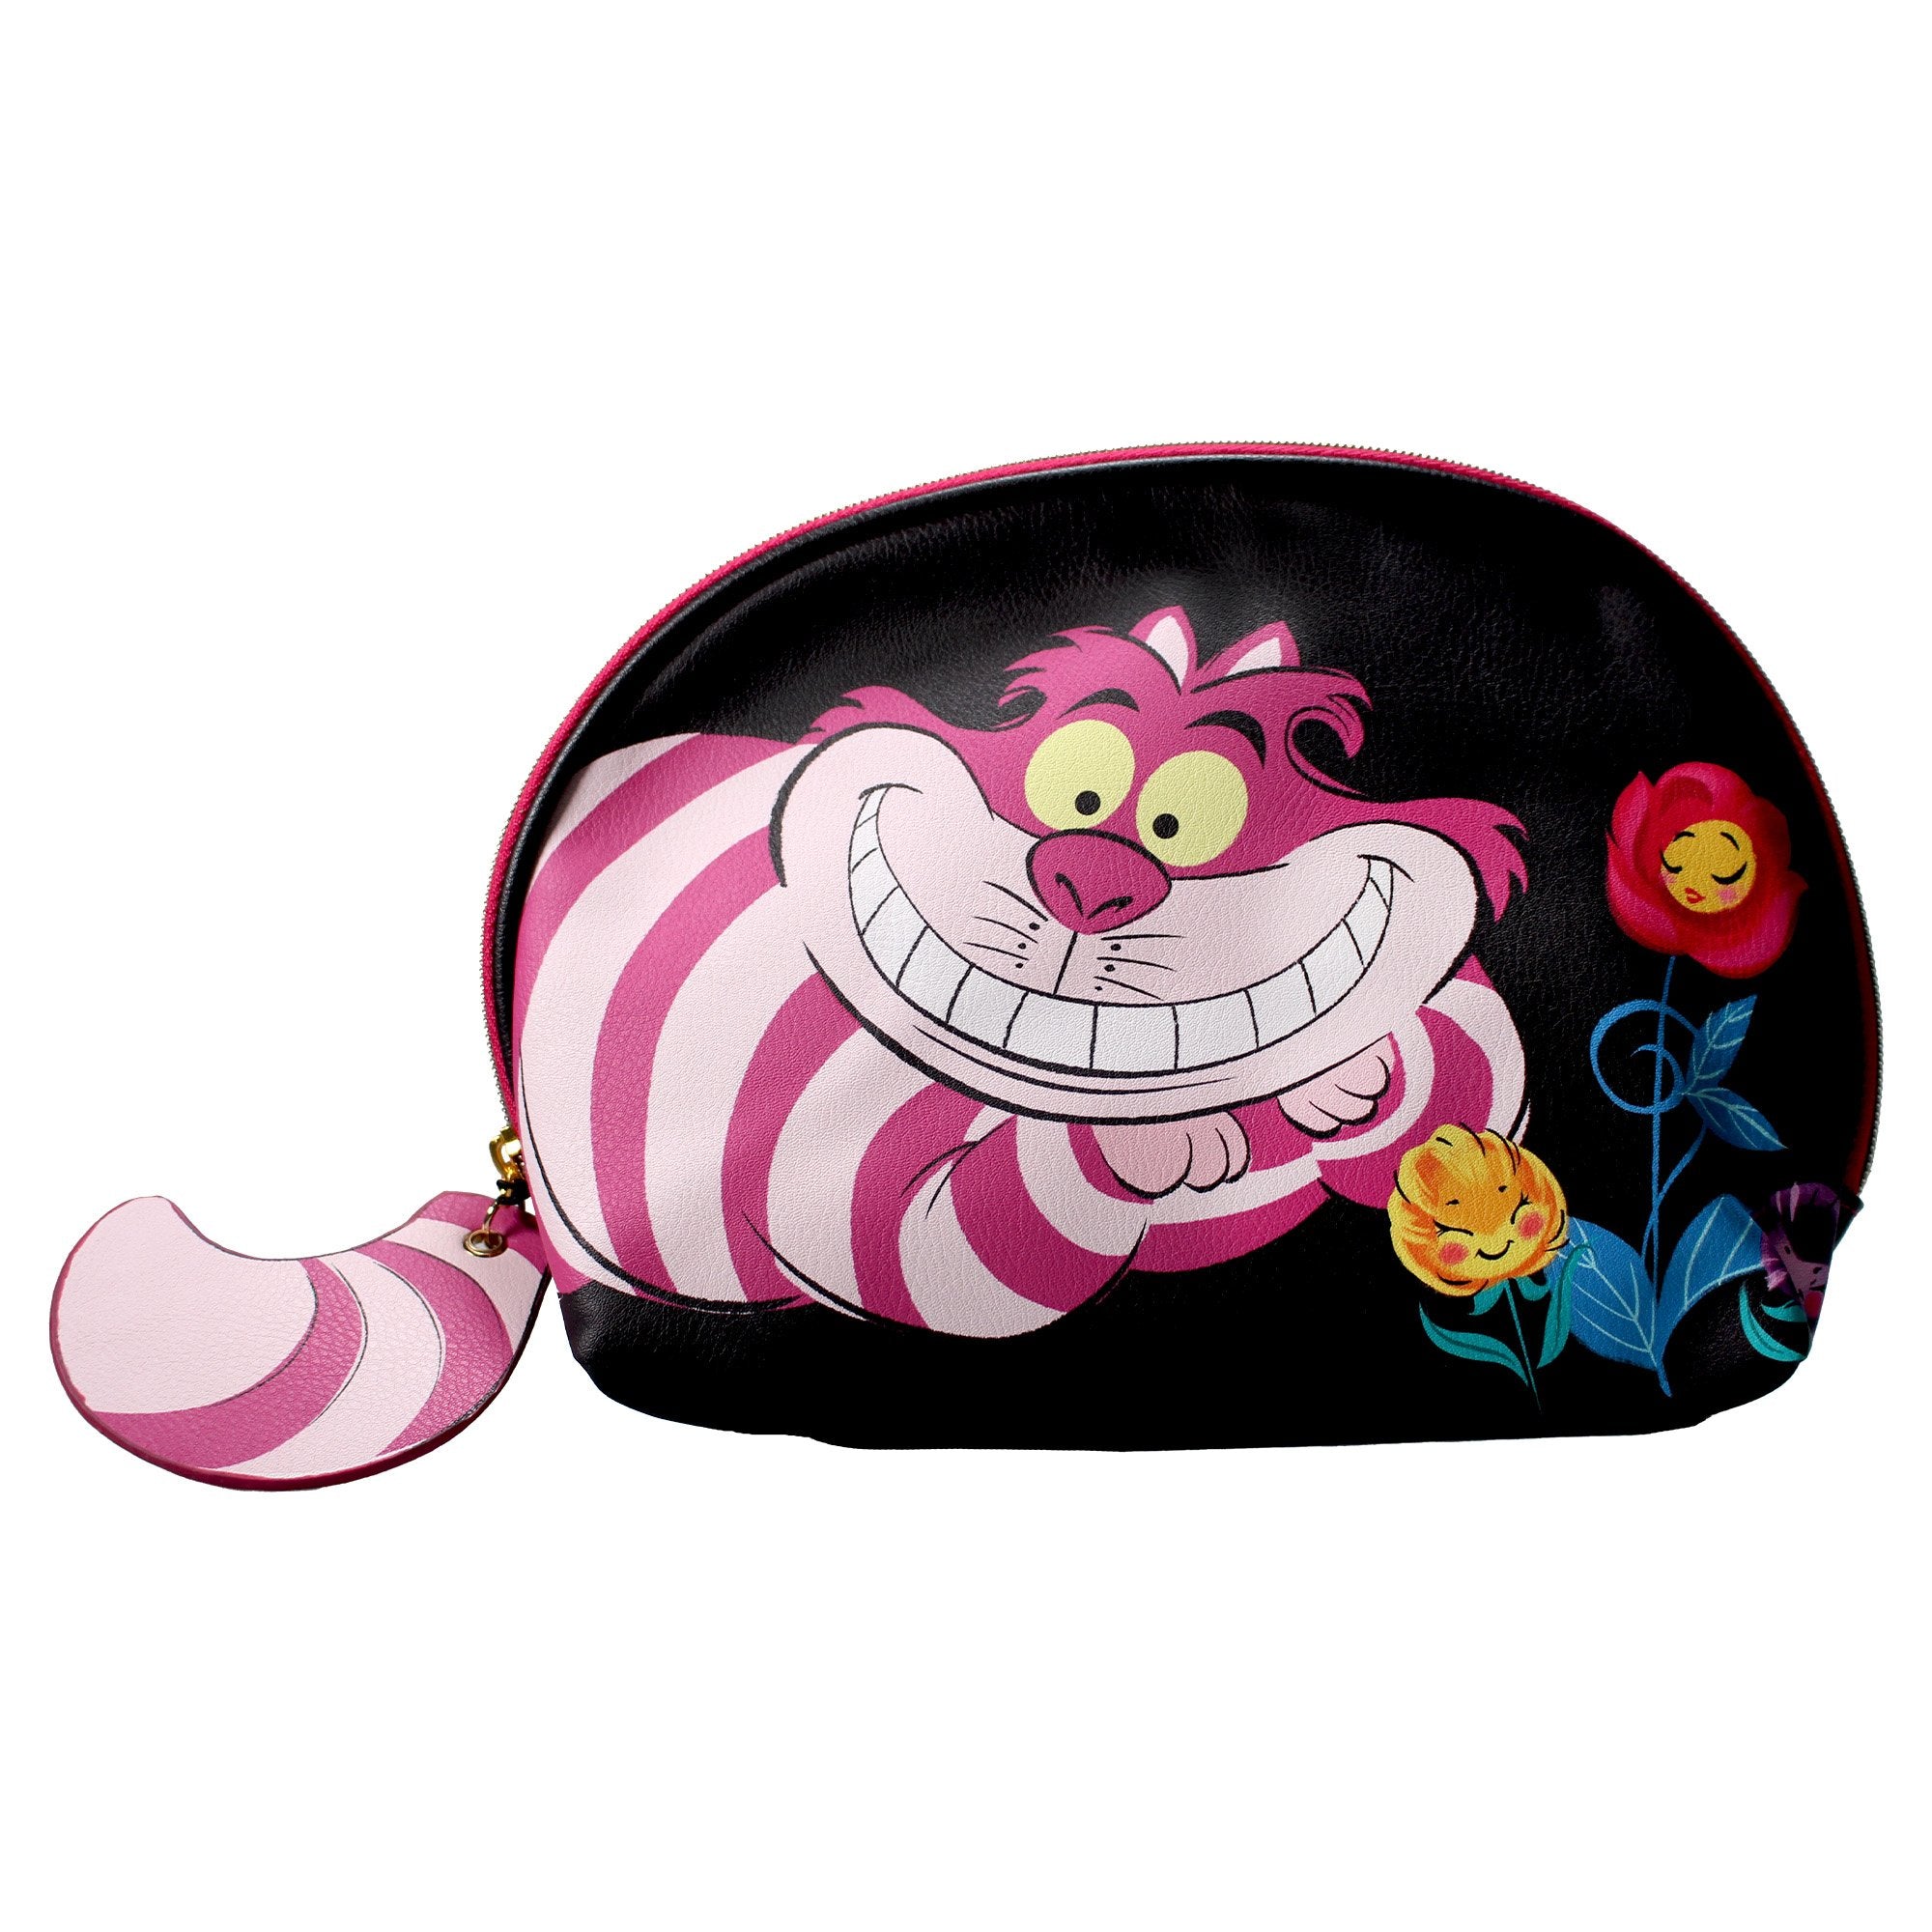 Cheshire Cat Cosmetic Bag - Alice in Wonderland